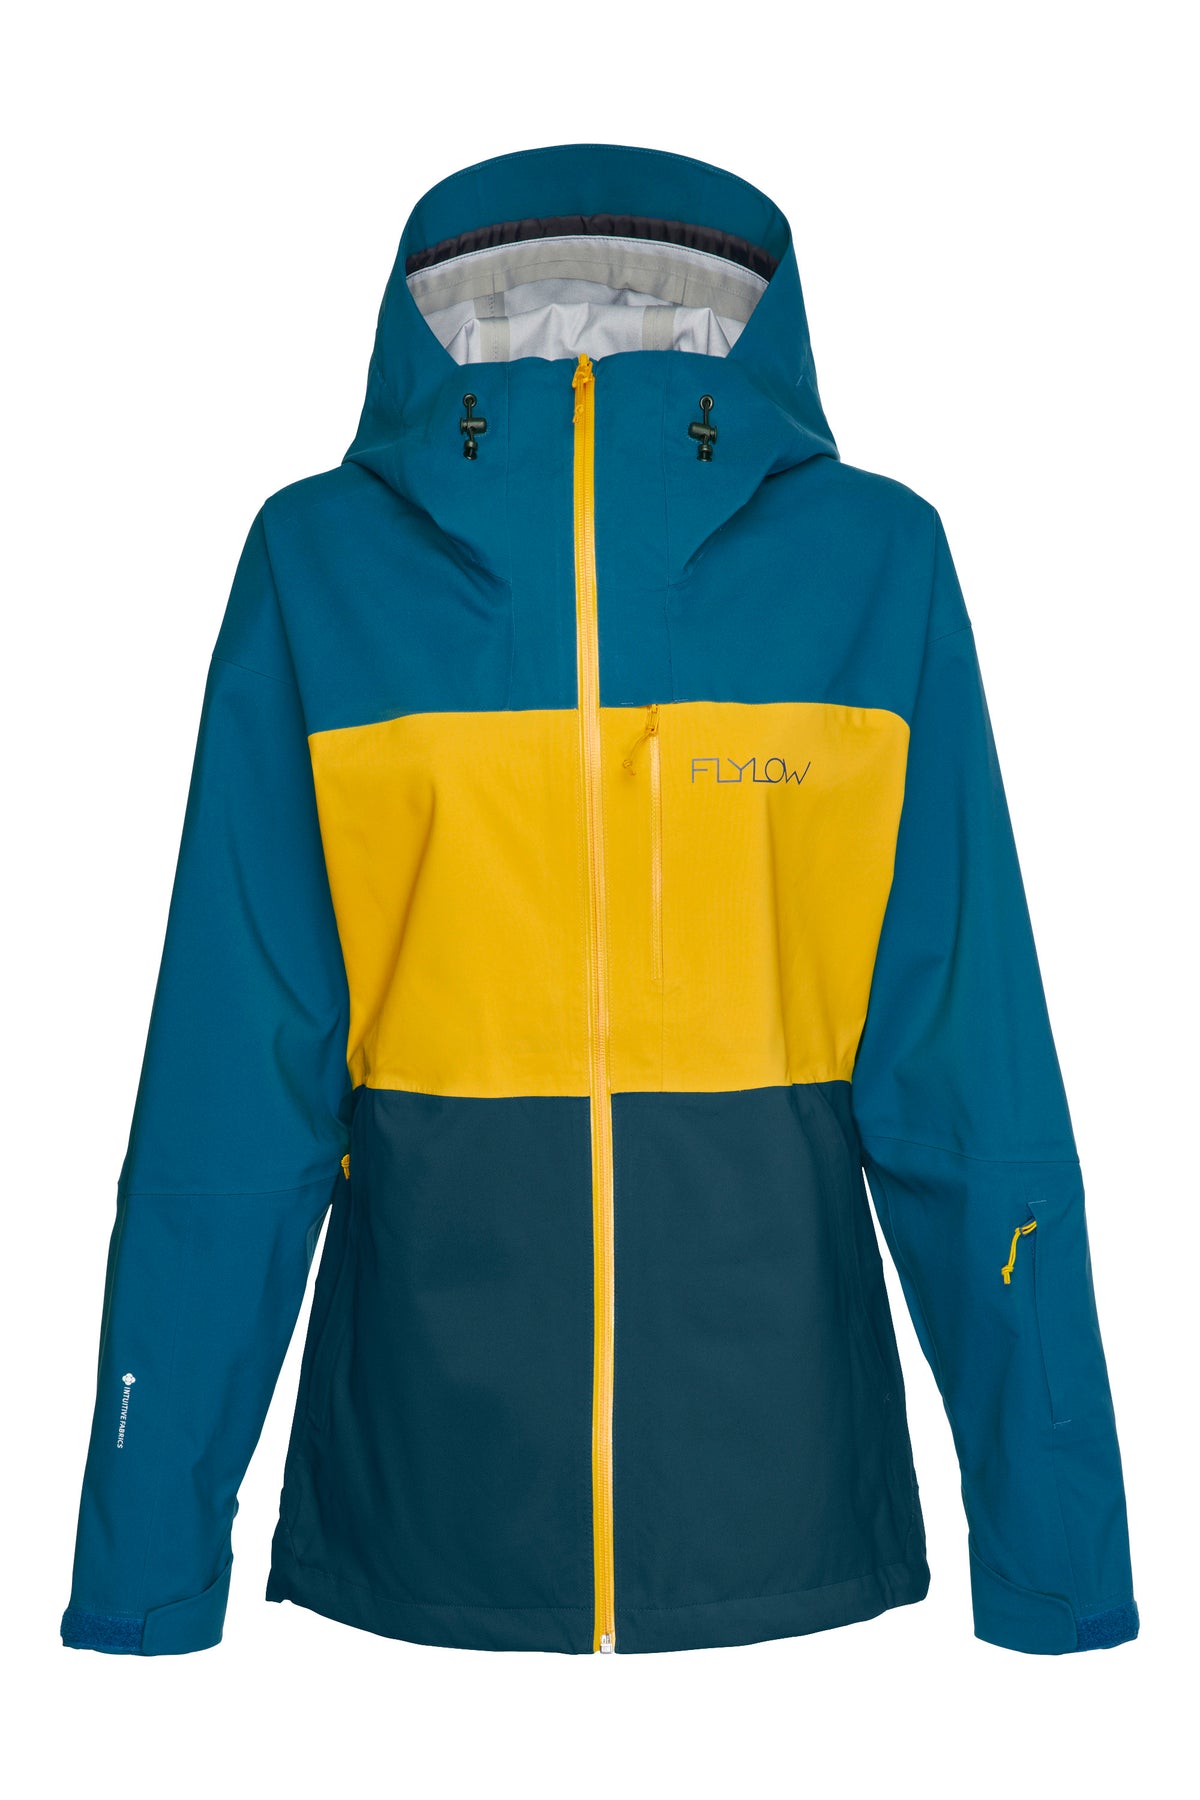 Lucy Jacket - Women's Backcountry Ski Jacket | Flylow Gear